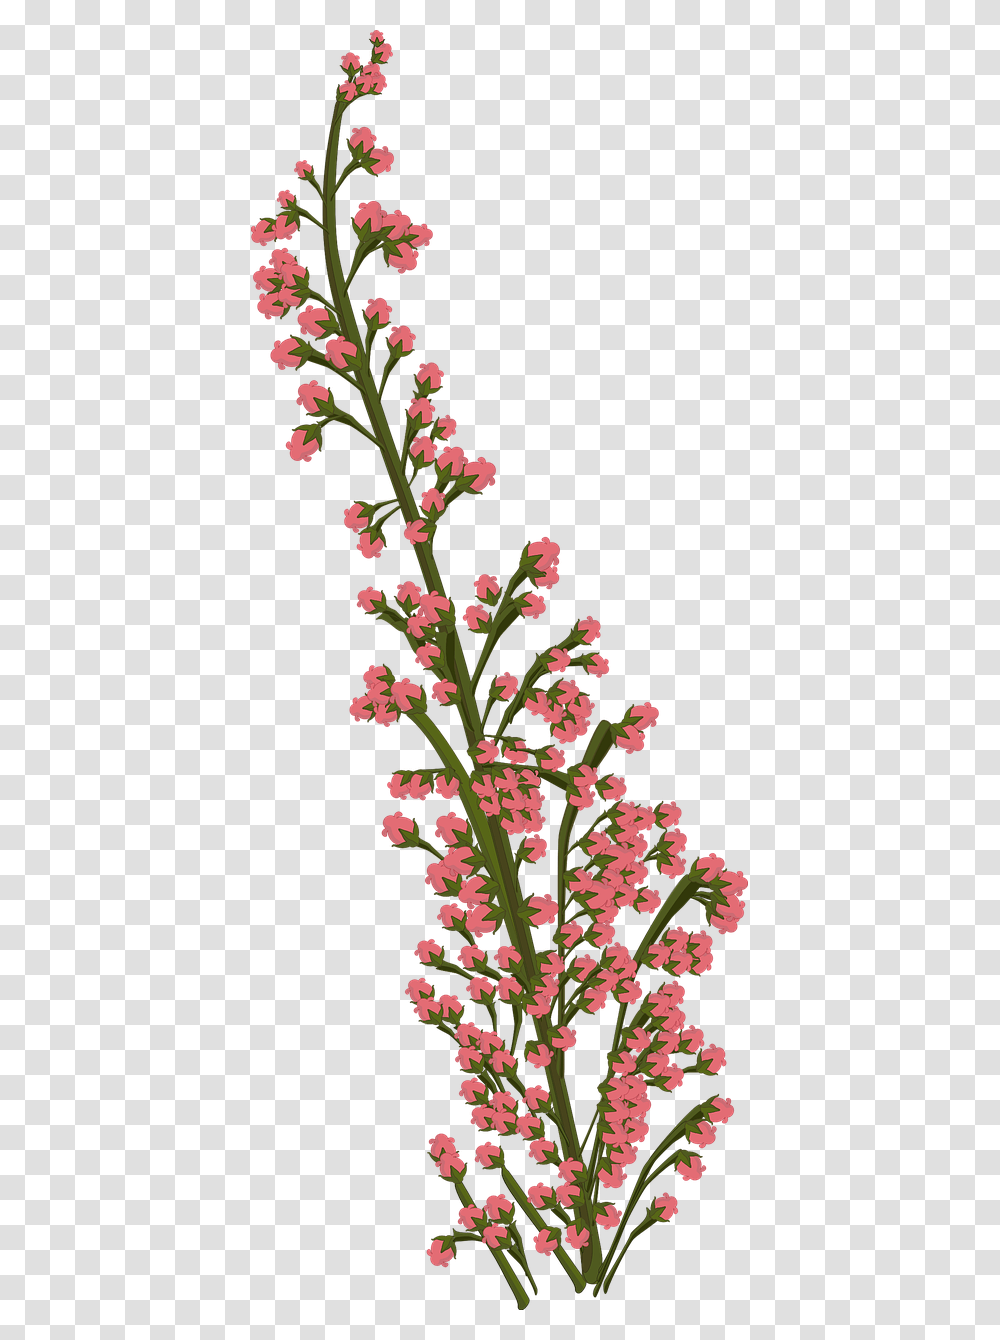 Flower Pink Plant Free Photo Flowers Drawing, Blossom, Acanthaceae, Vase, Jar Transparent Png